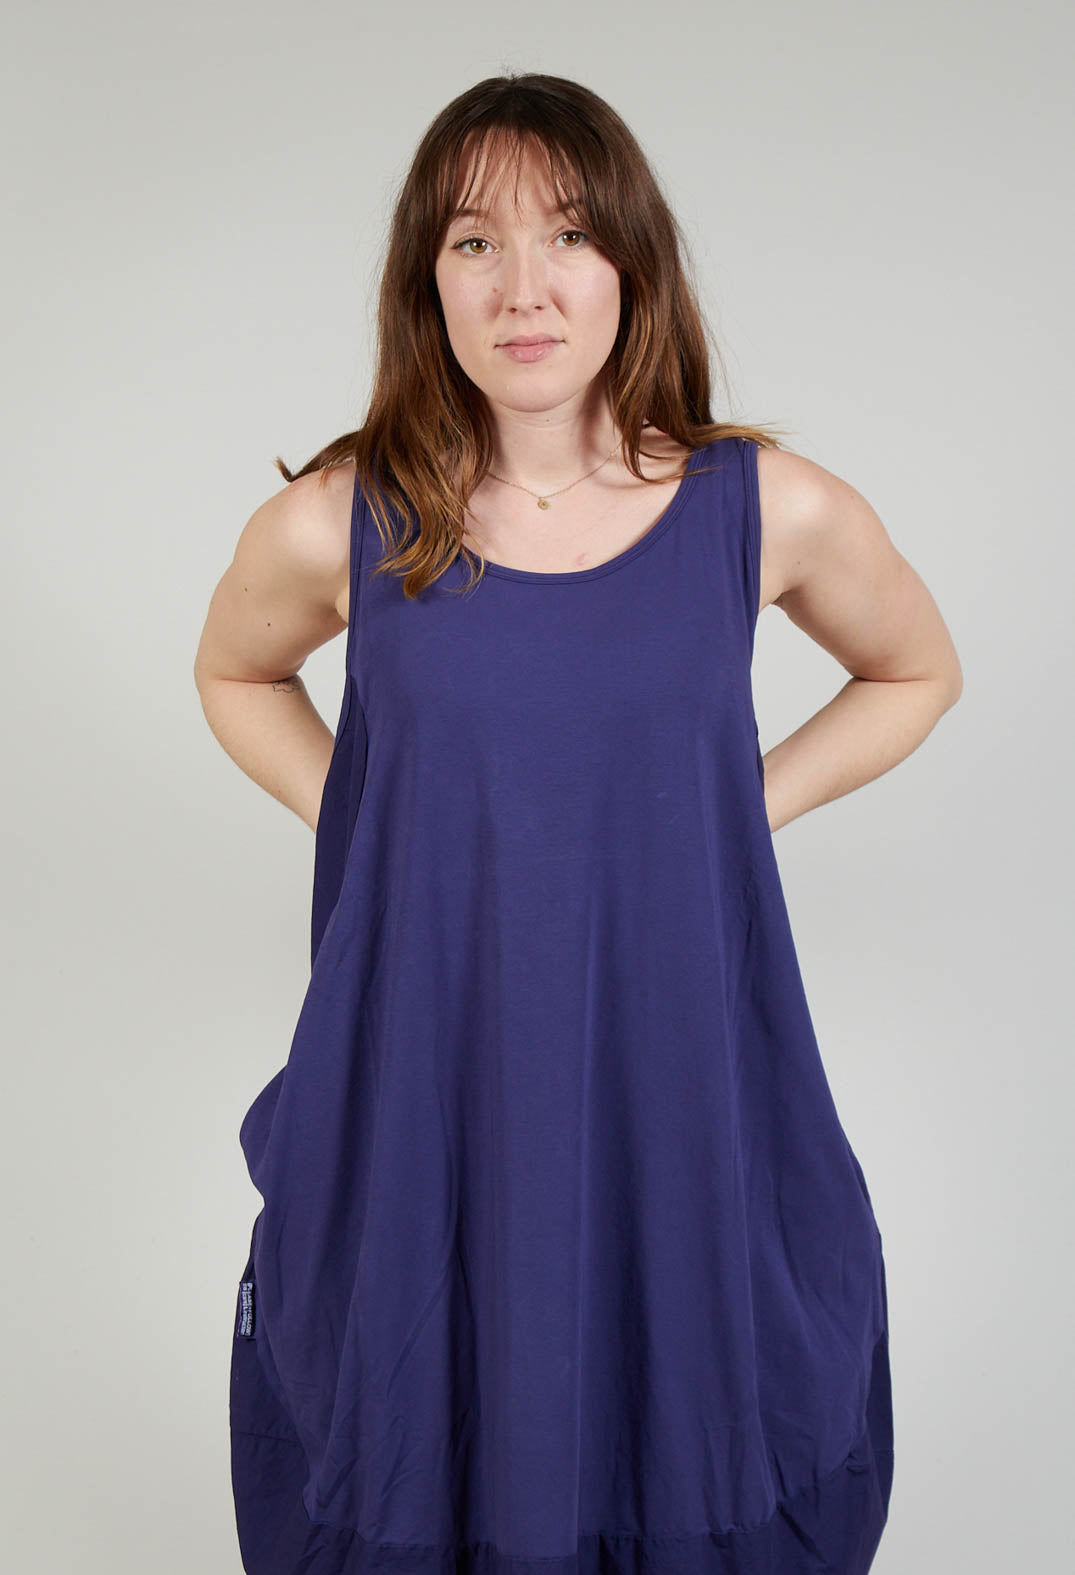 Dual Fabric Sleeveless Dress in Azur